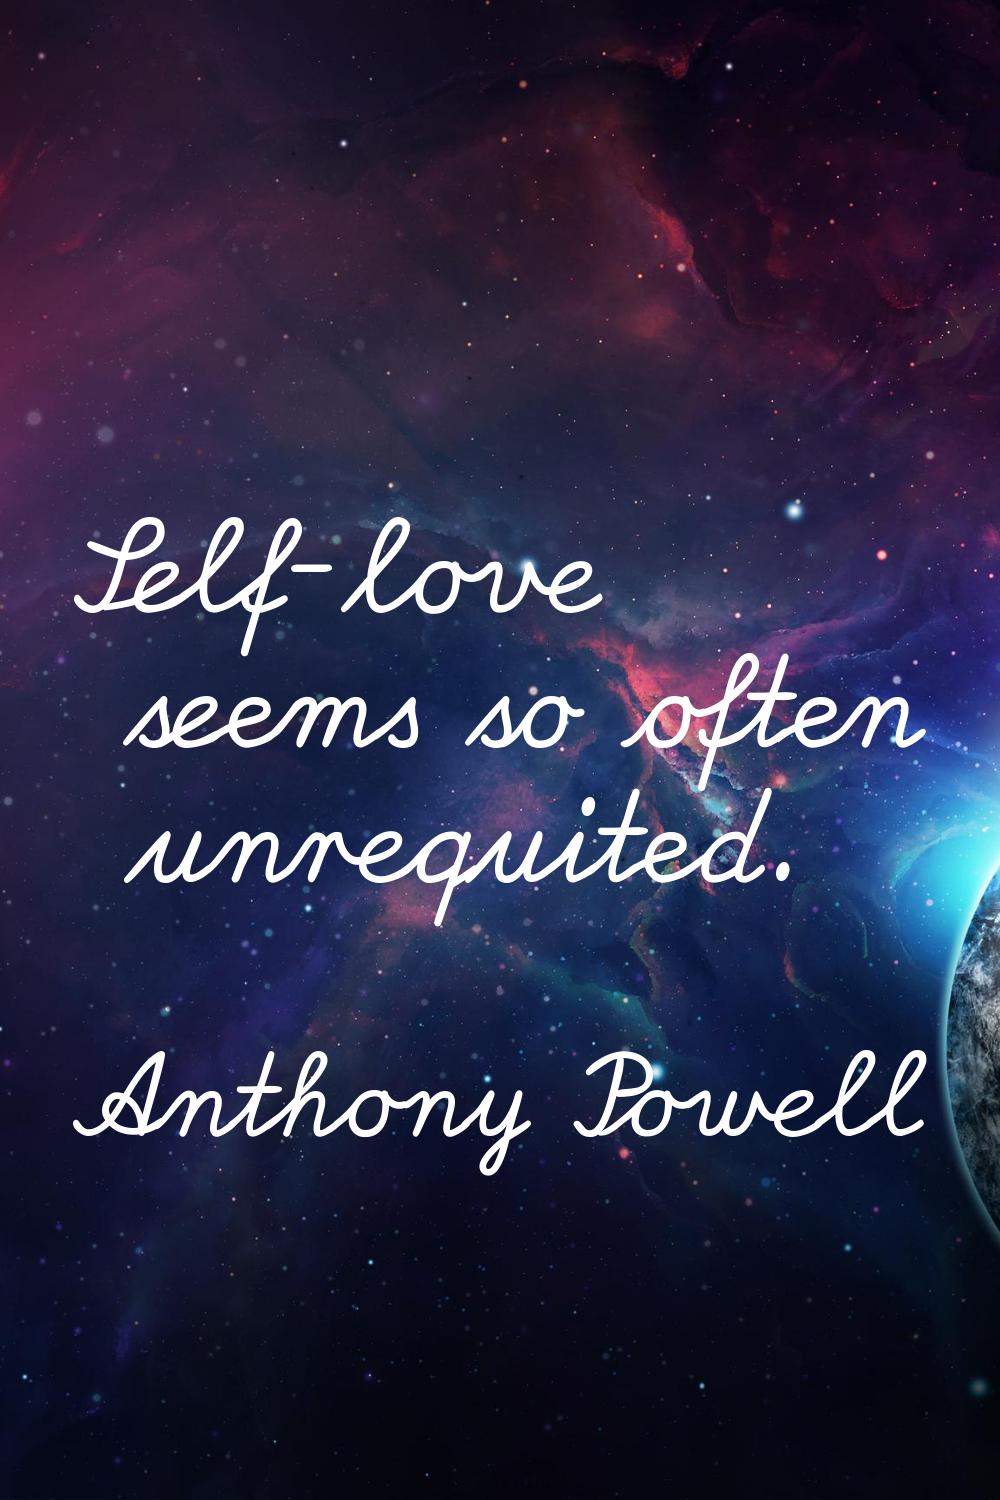 Self-love seems so often unrequited.